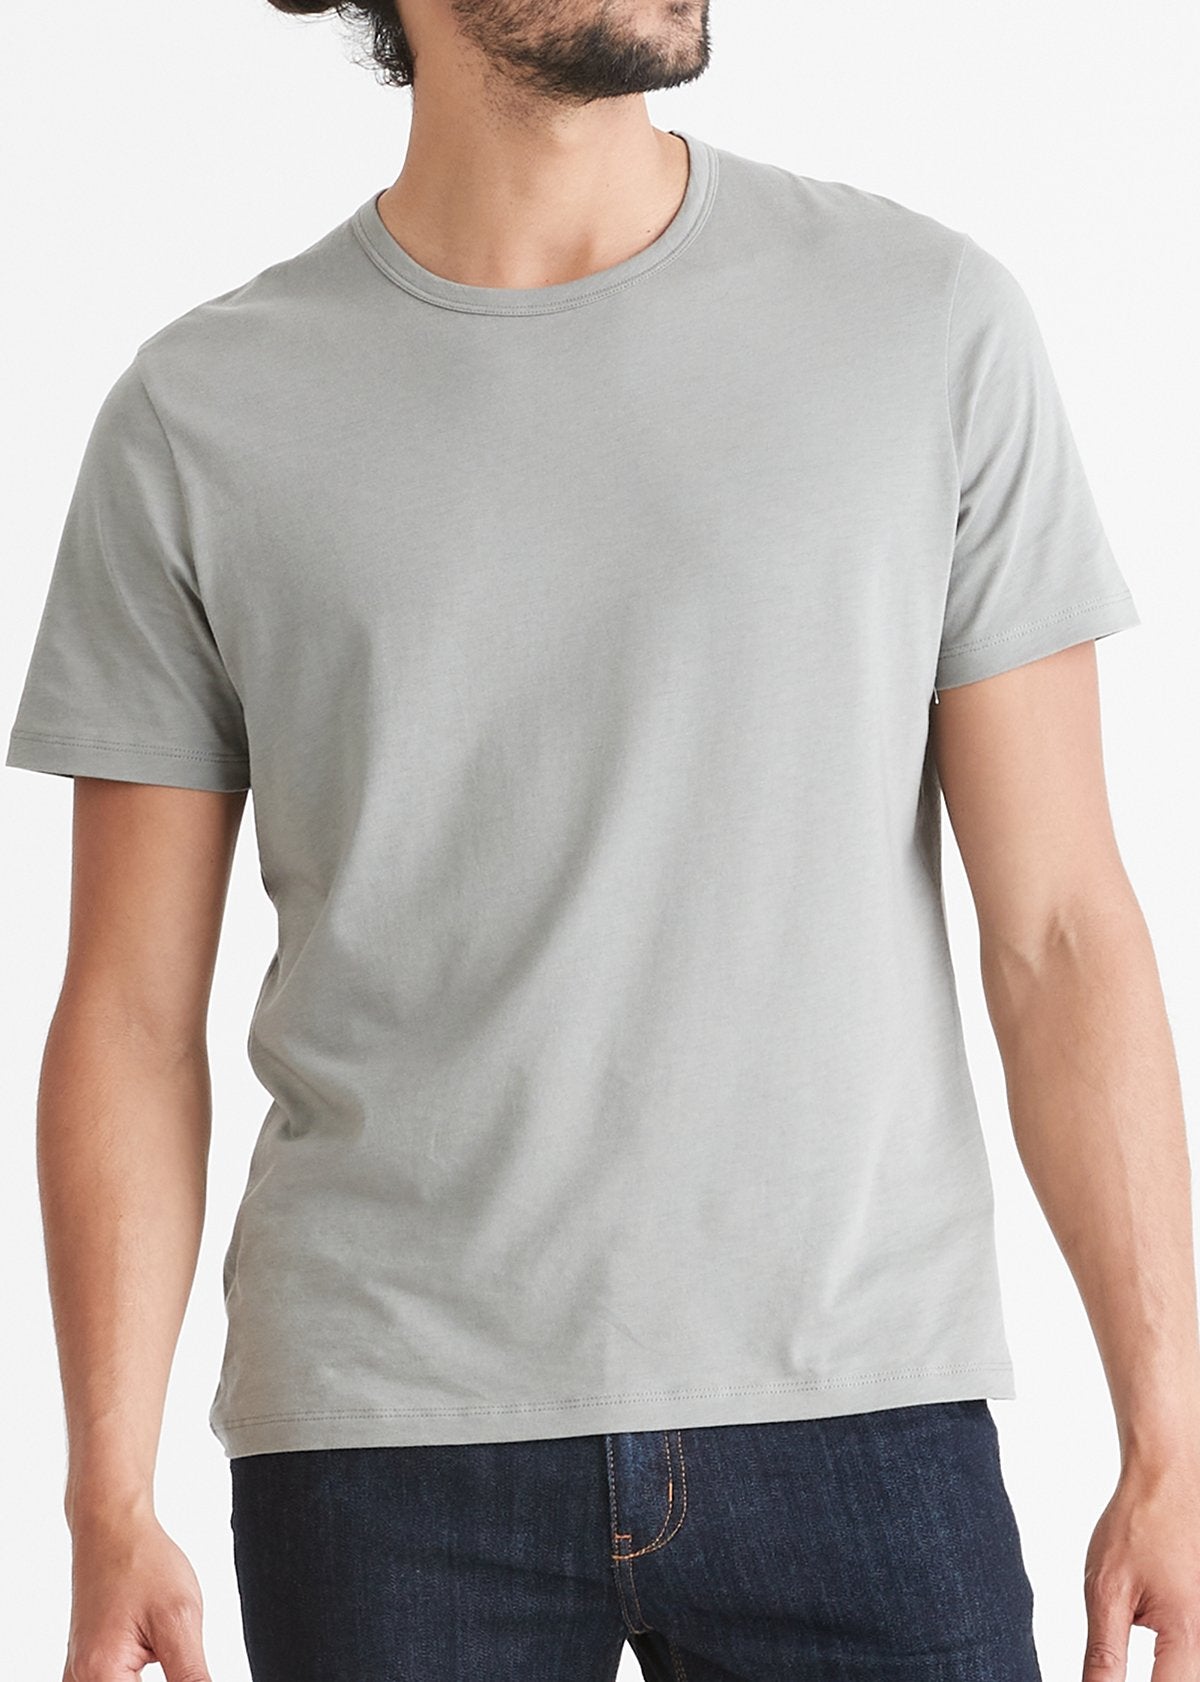 men's soft lightweight green grey tshirt front